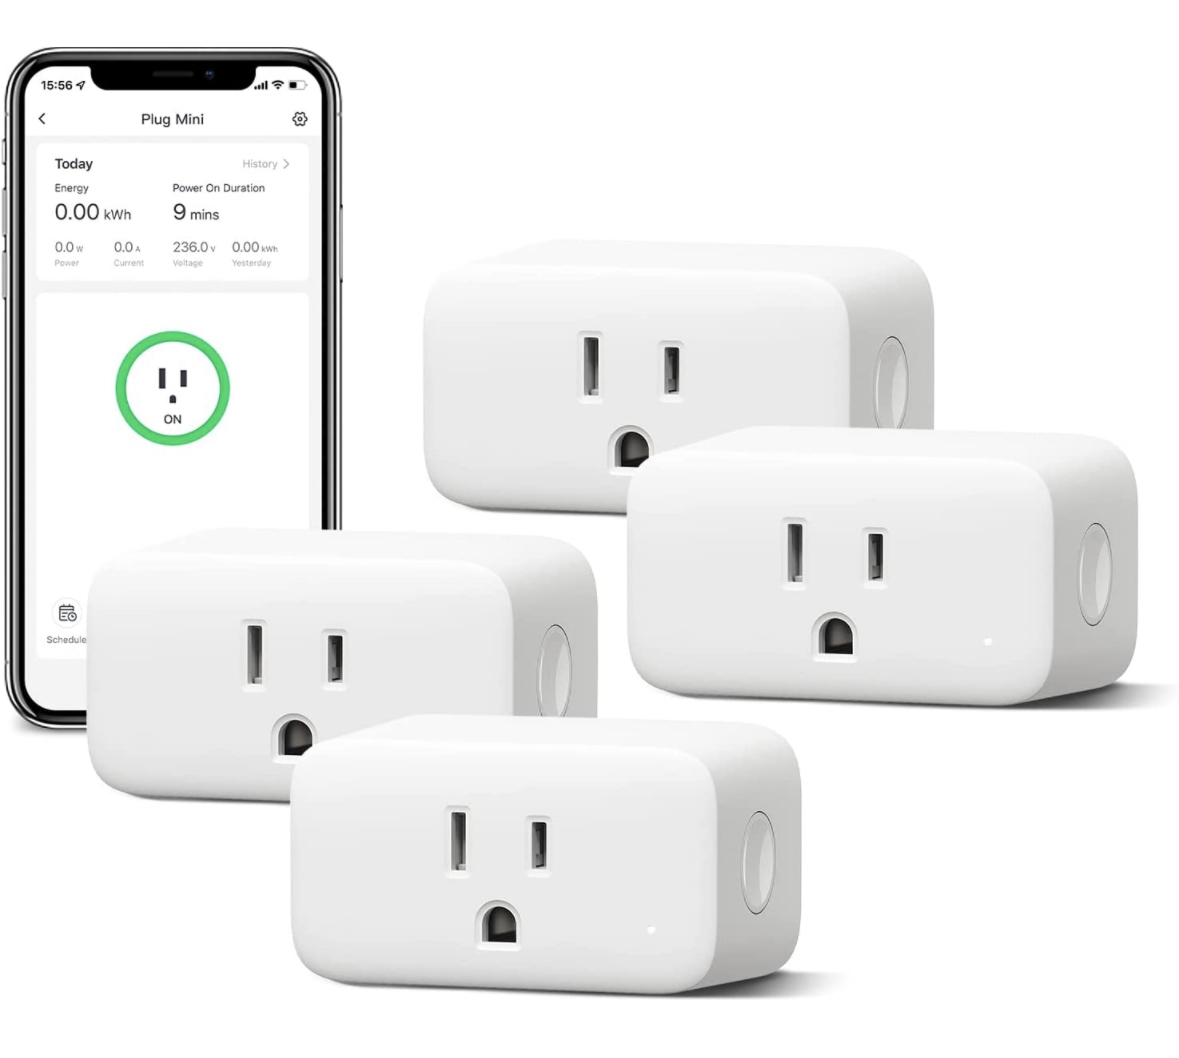 4-pack Switchbot smartplug mini 15A with energy monitoring $22.50 @Amazon